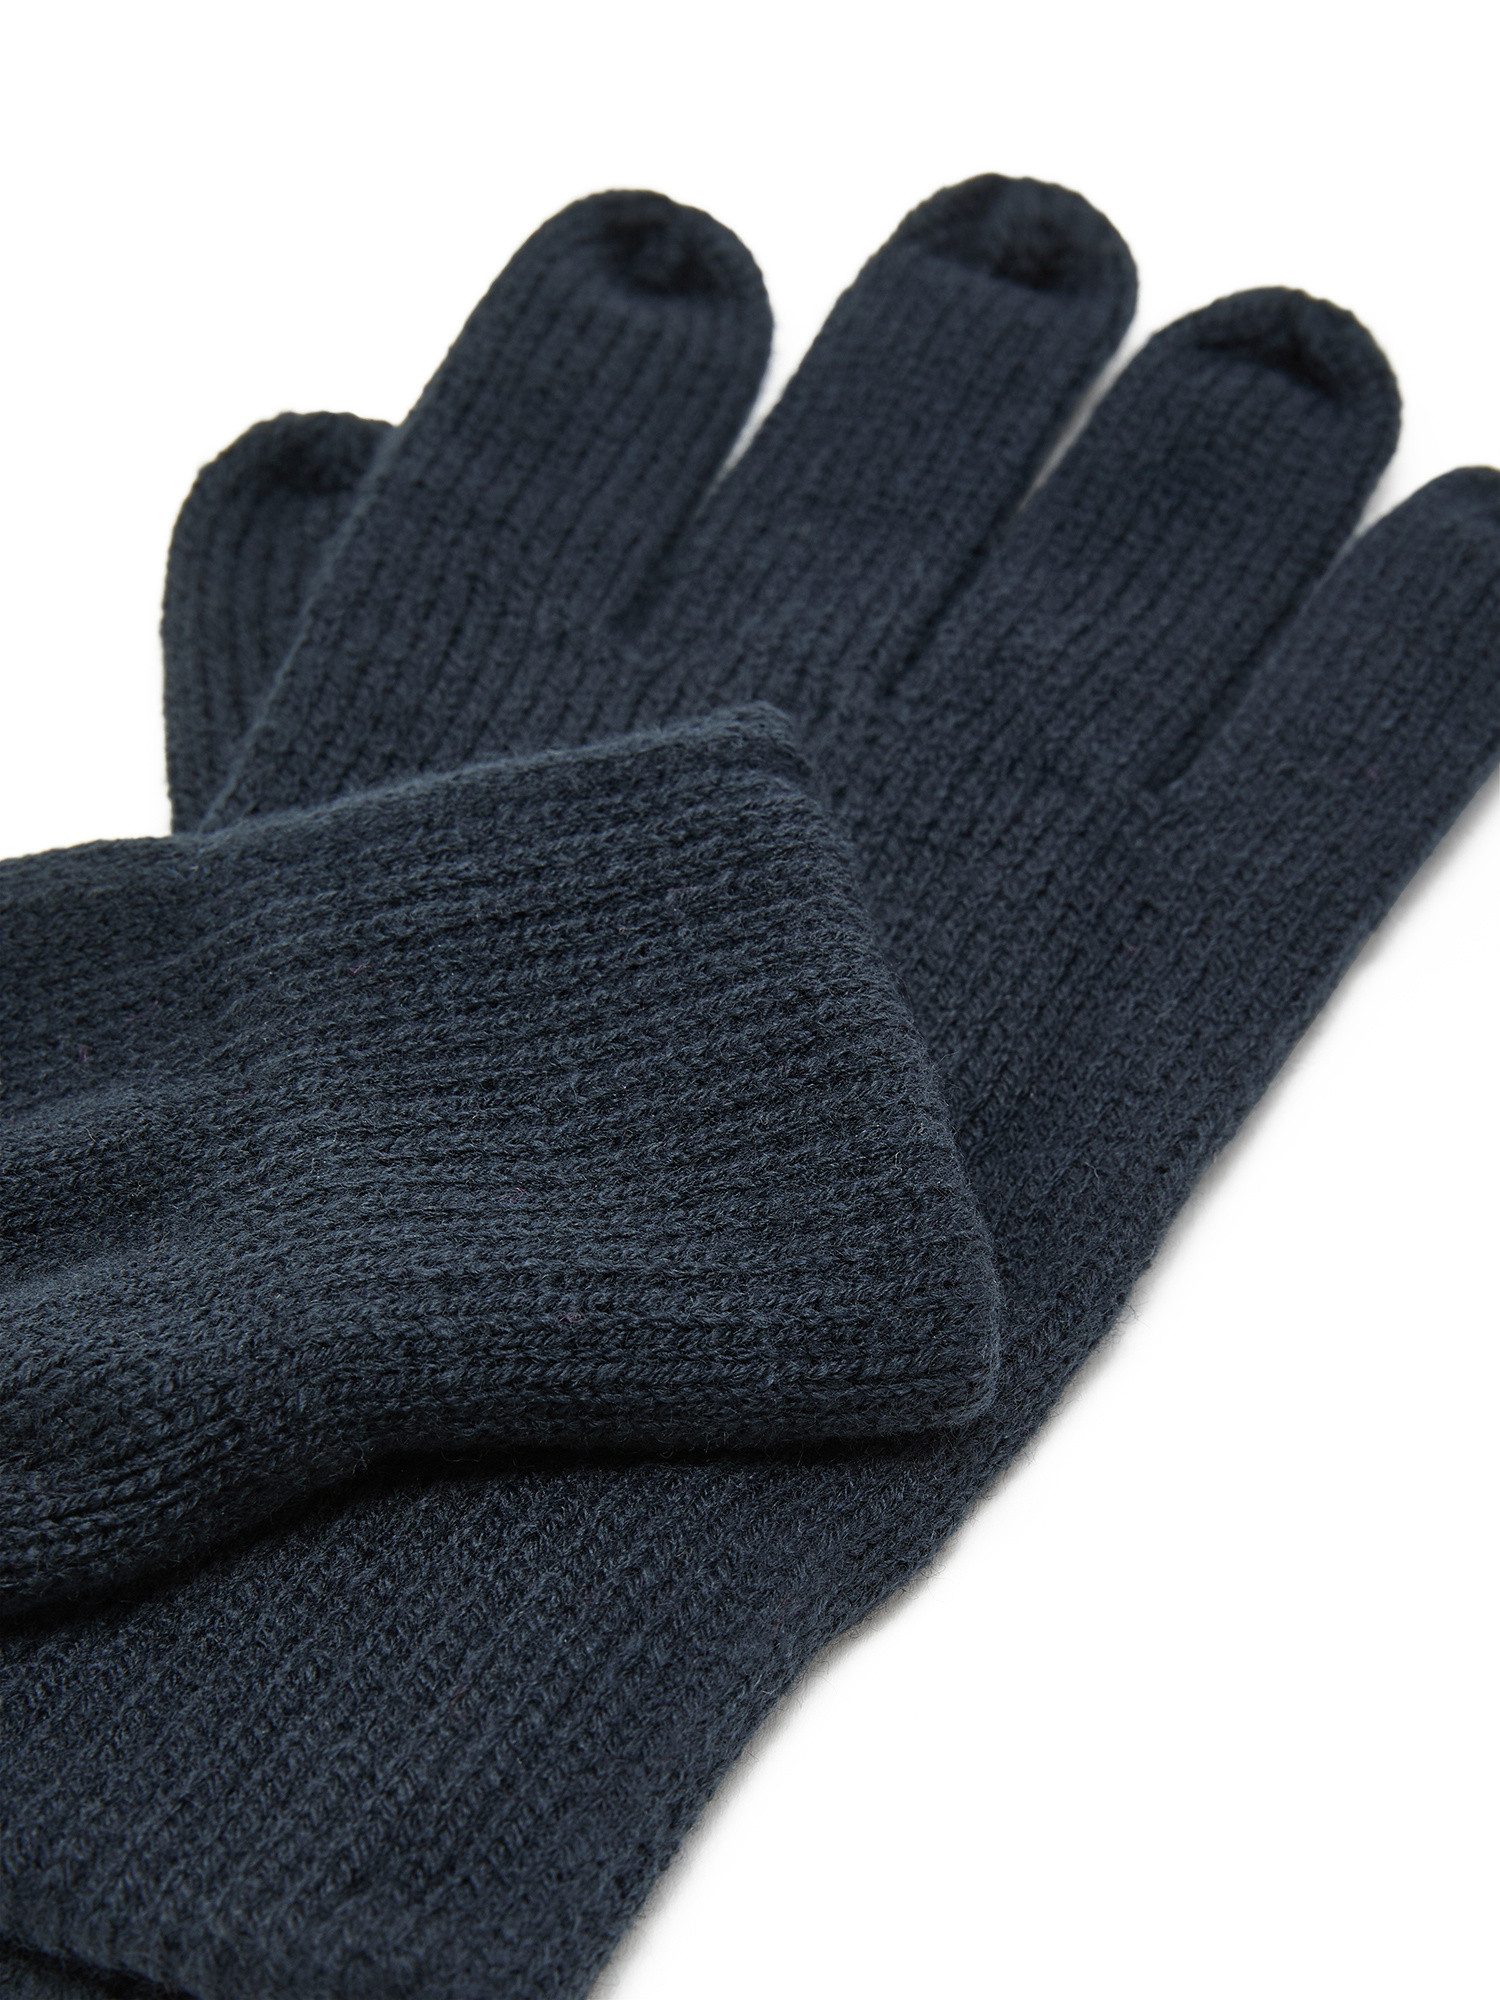 Luca D'Altieri - Basic knitted gloves, Dark Blue, large image number 1